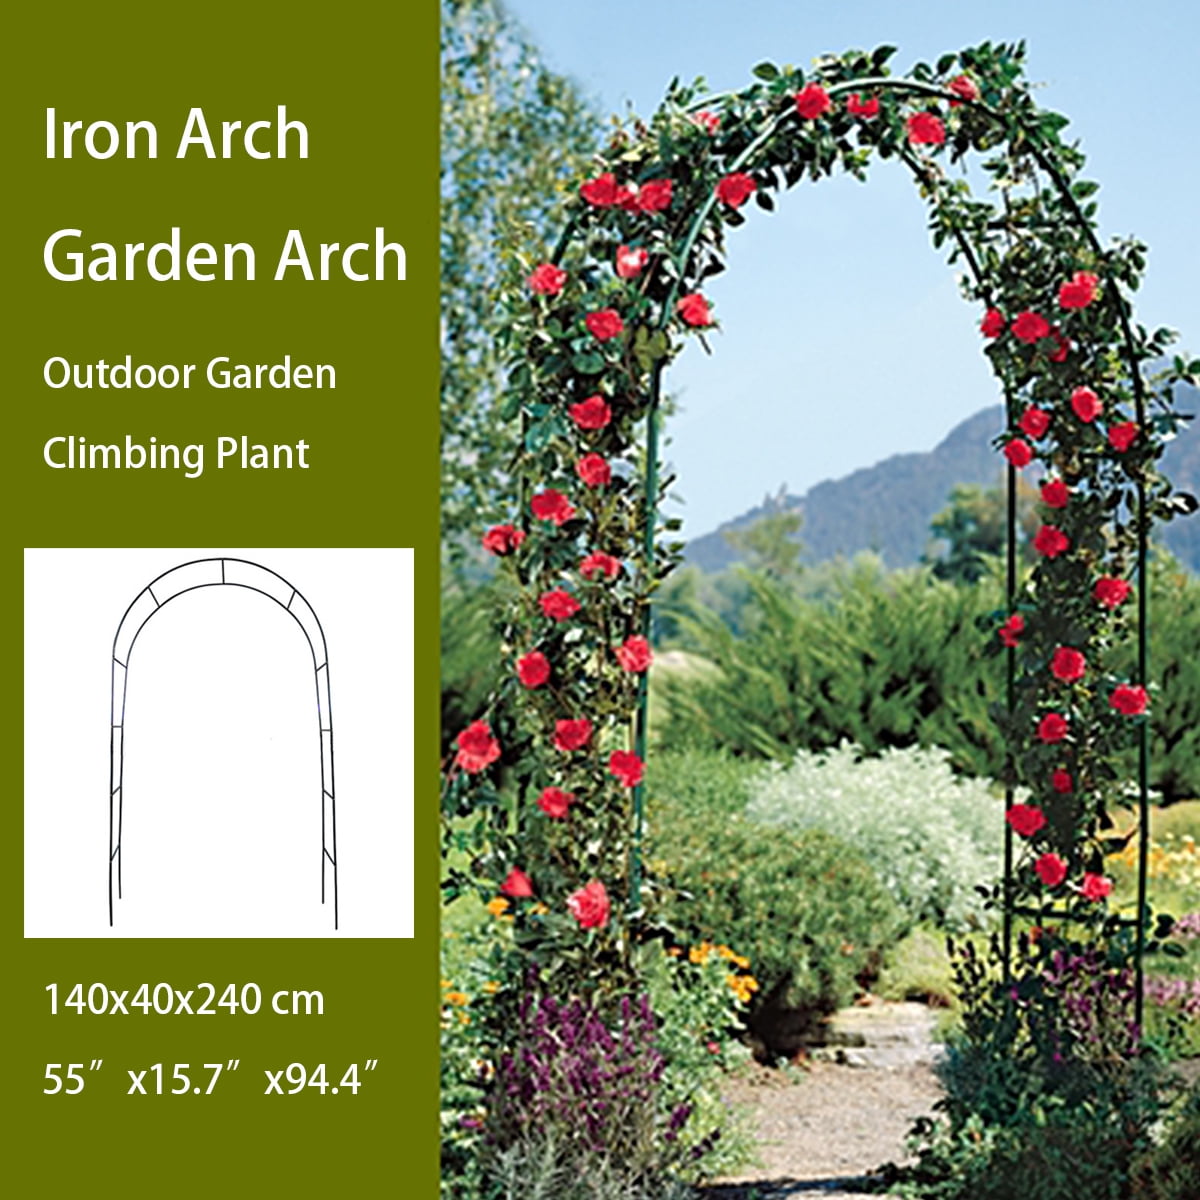 Garden Arch,Rose Arches Metal,Flower Arch Frame,Plant Climbing Archway Iron Weather-Proof Support Decoration for Wedding Garden Dark Green 